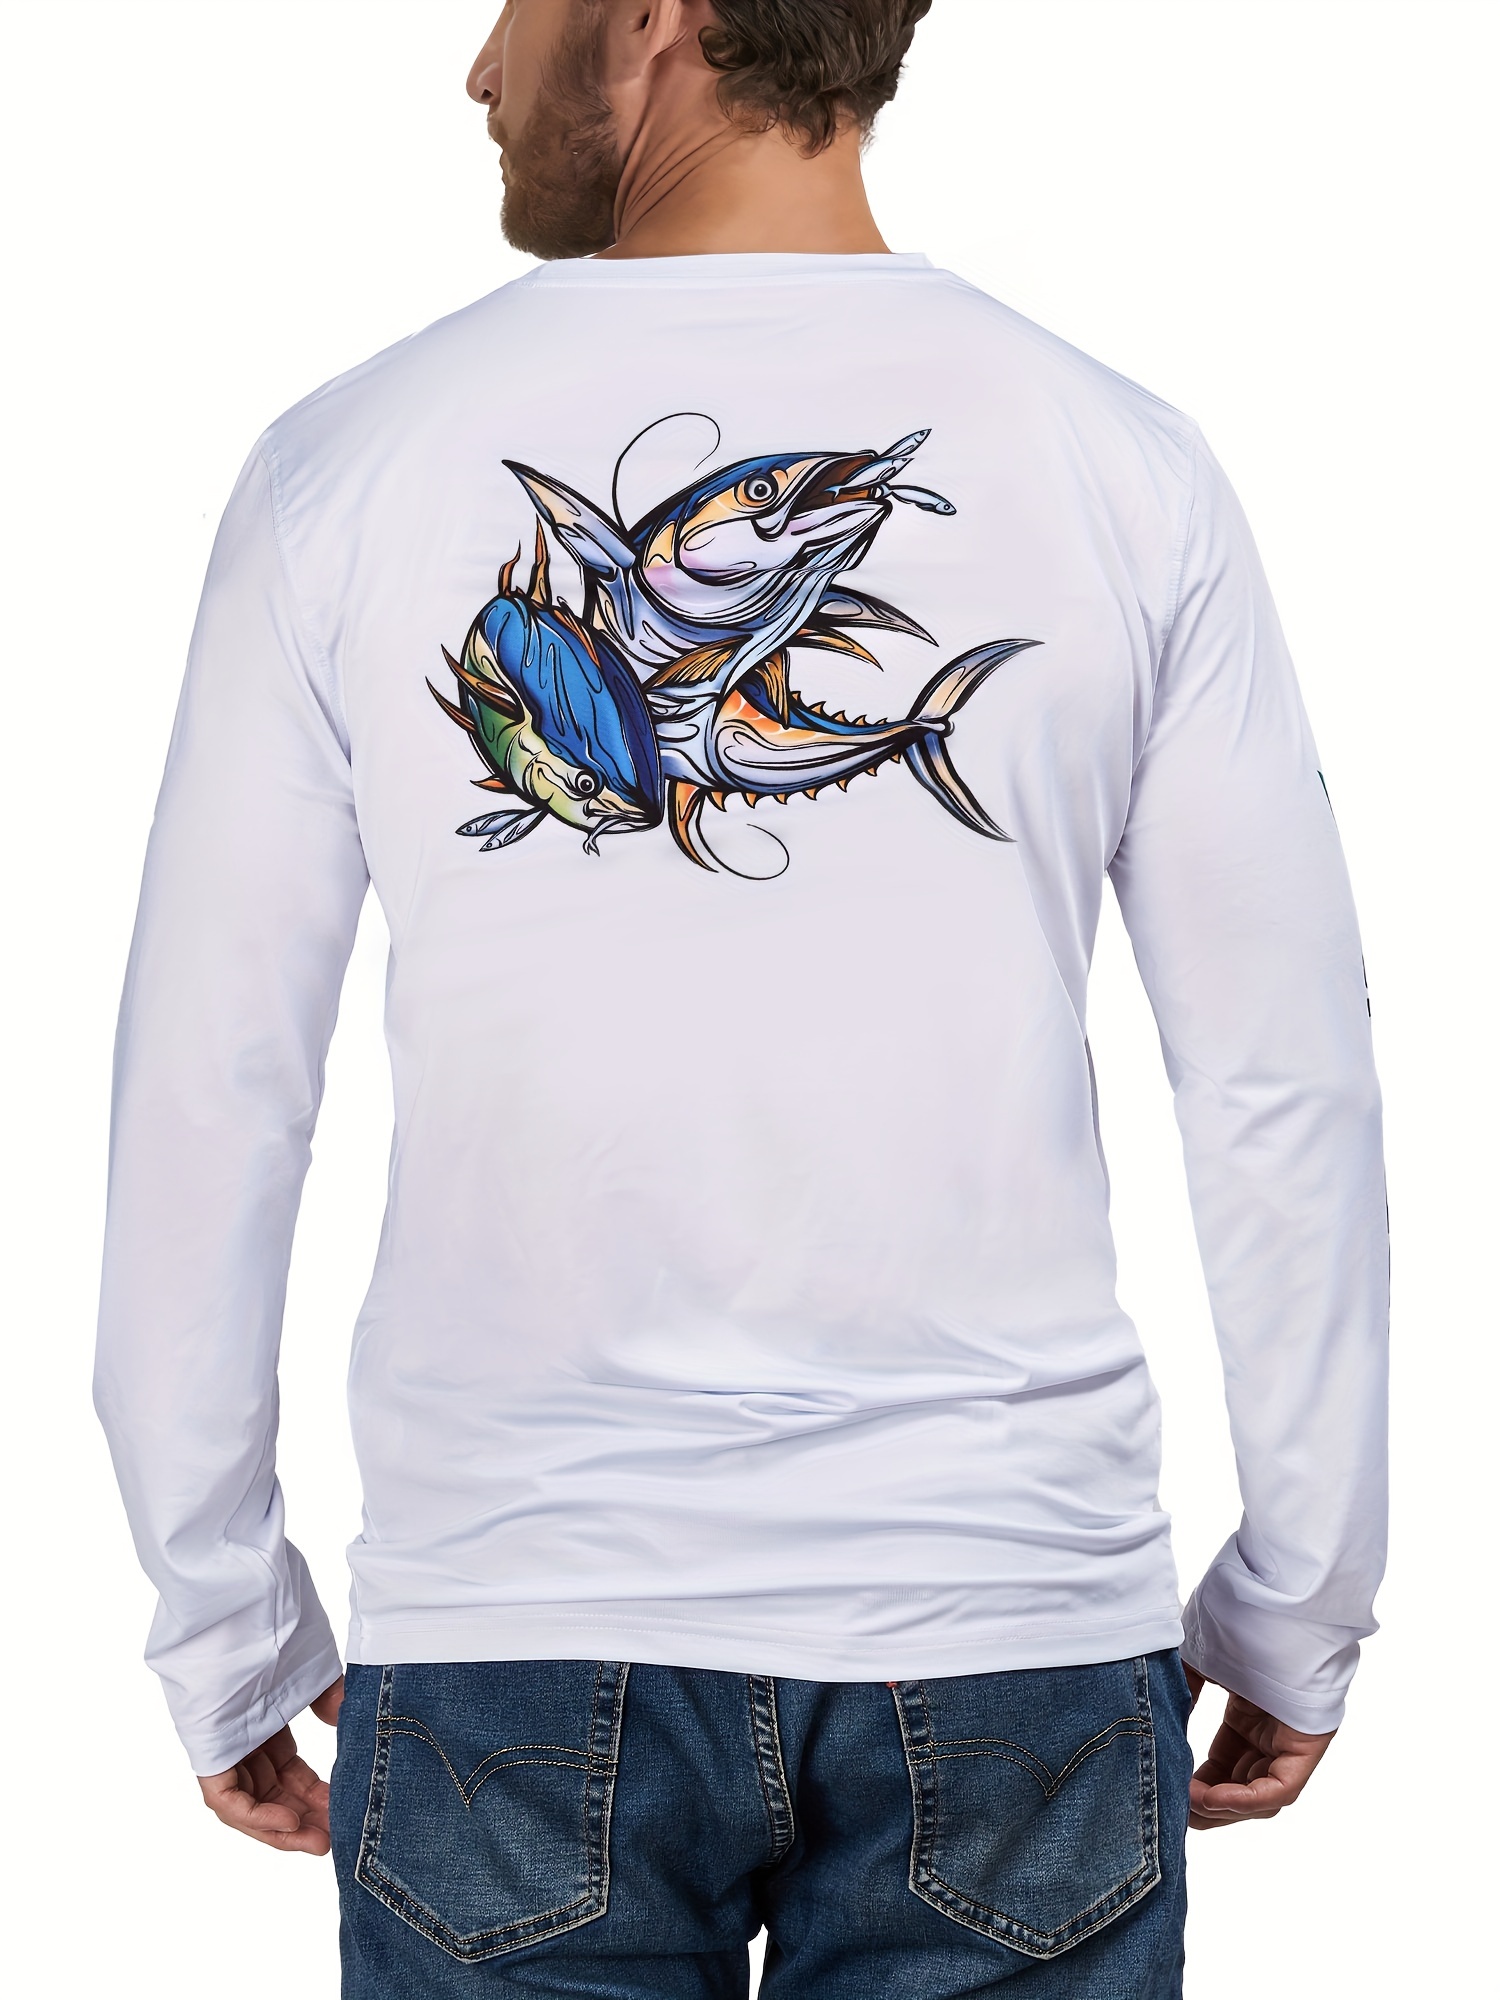 Naviskin UPF 50+ Outdoor Ridge Long Sleeve Shirt Quick Dry Fishing Shirts  for Men (Khaki, L) price in UAE,  UAE